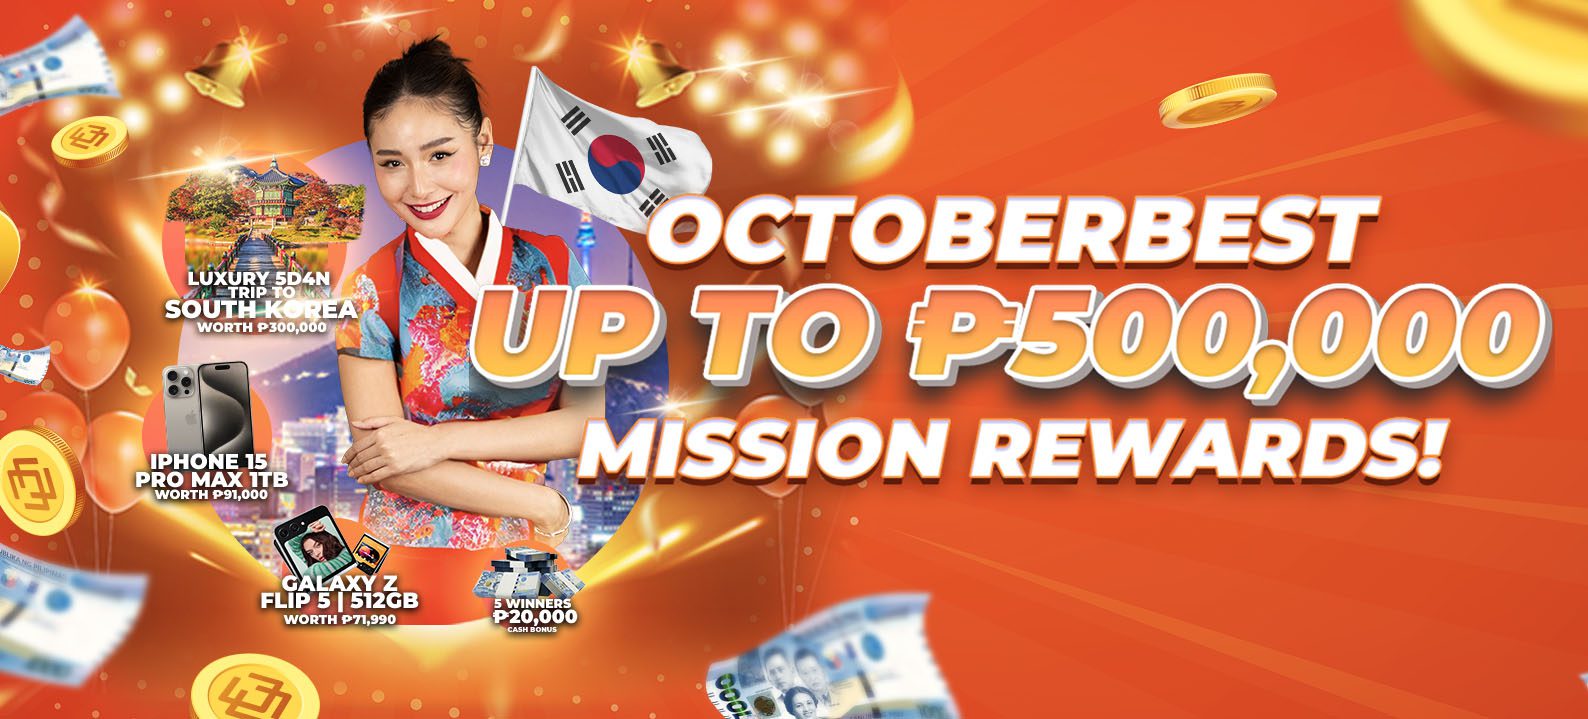 OctoberBest Mission Rewards